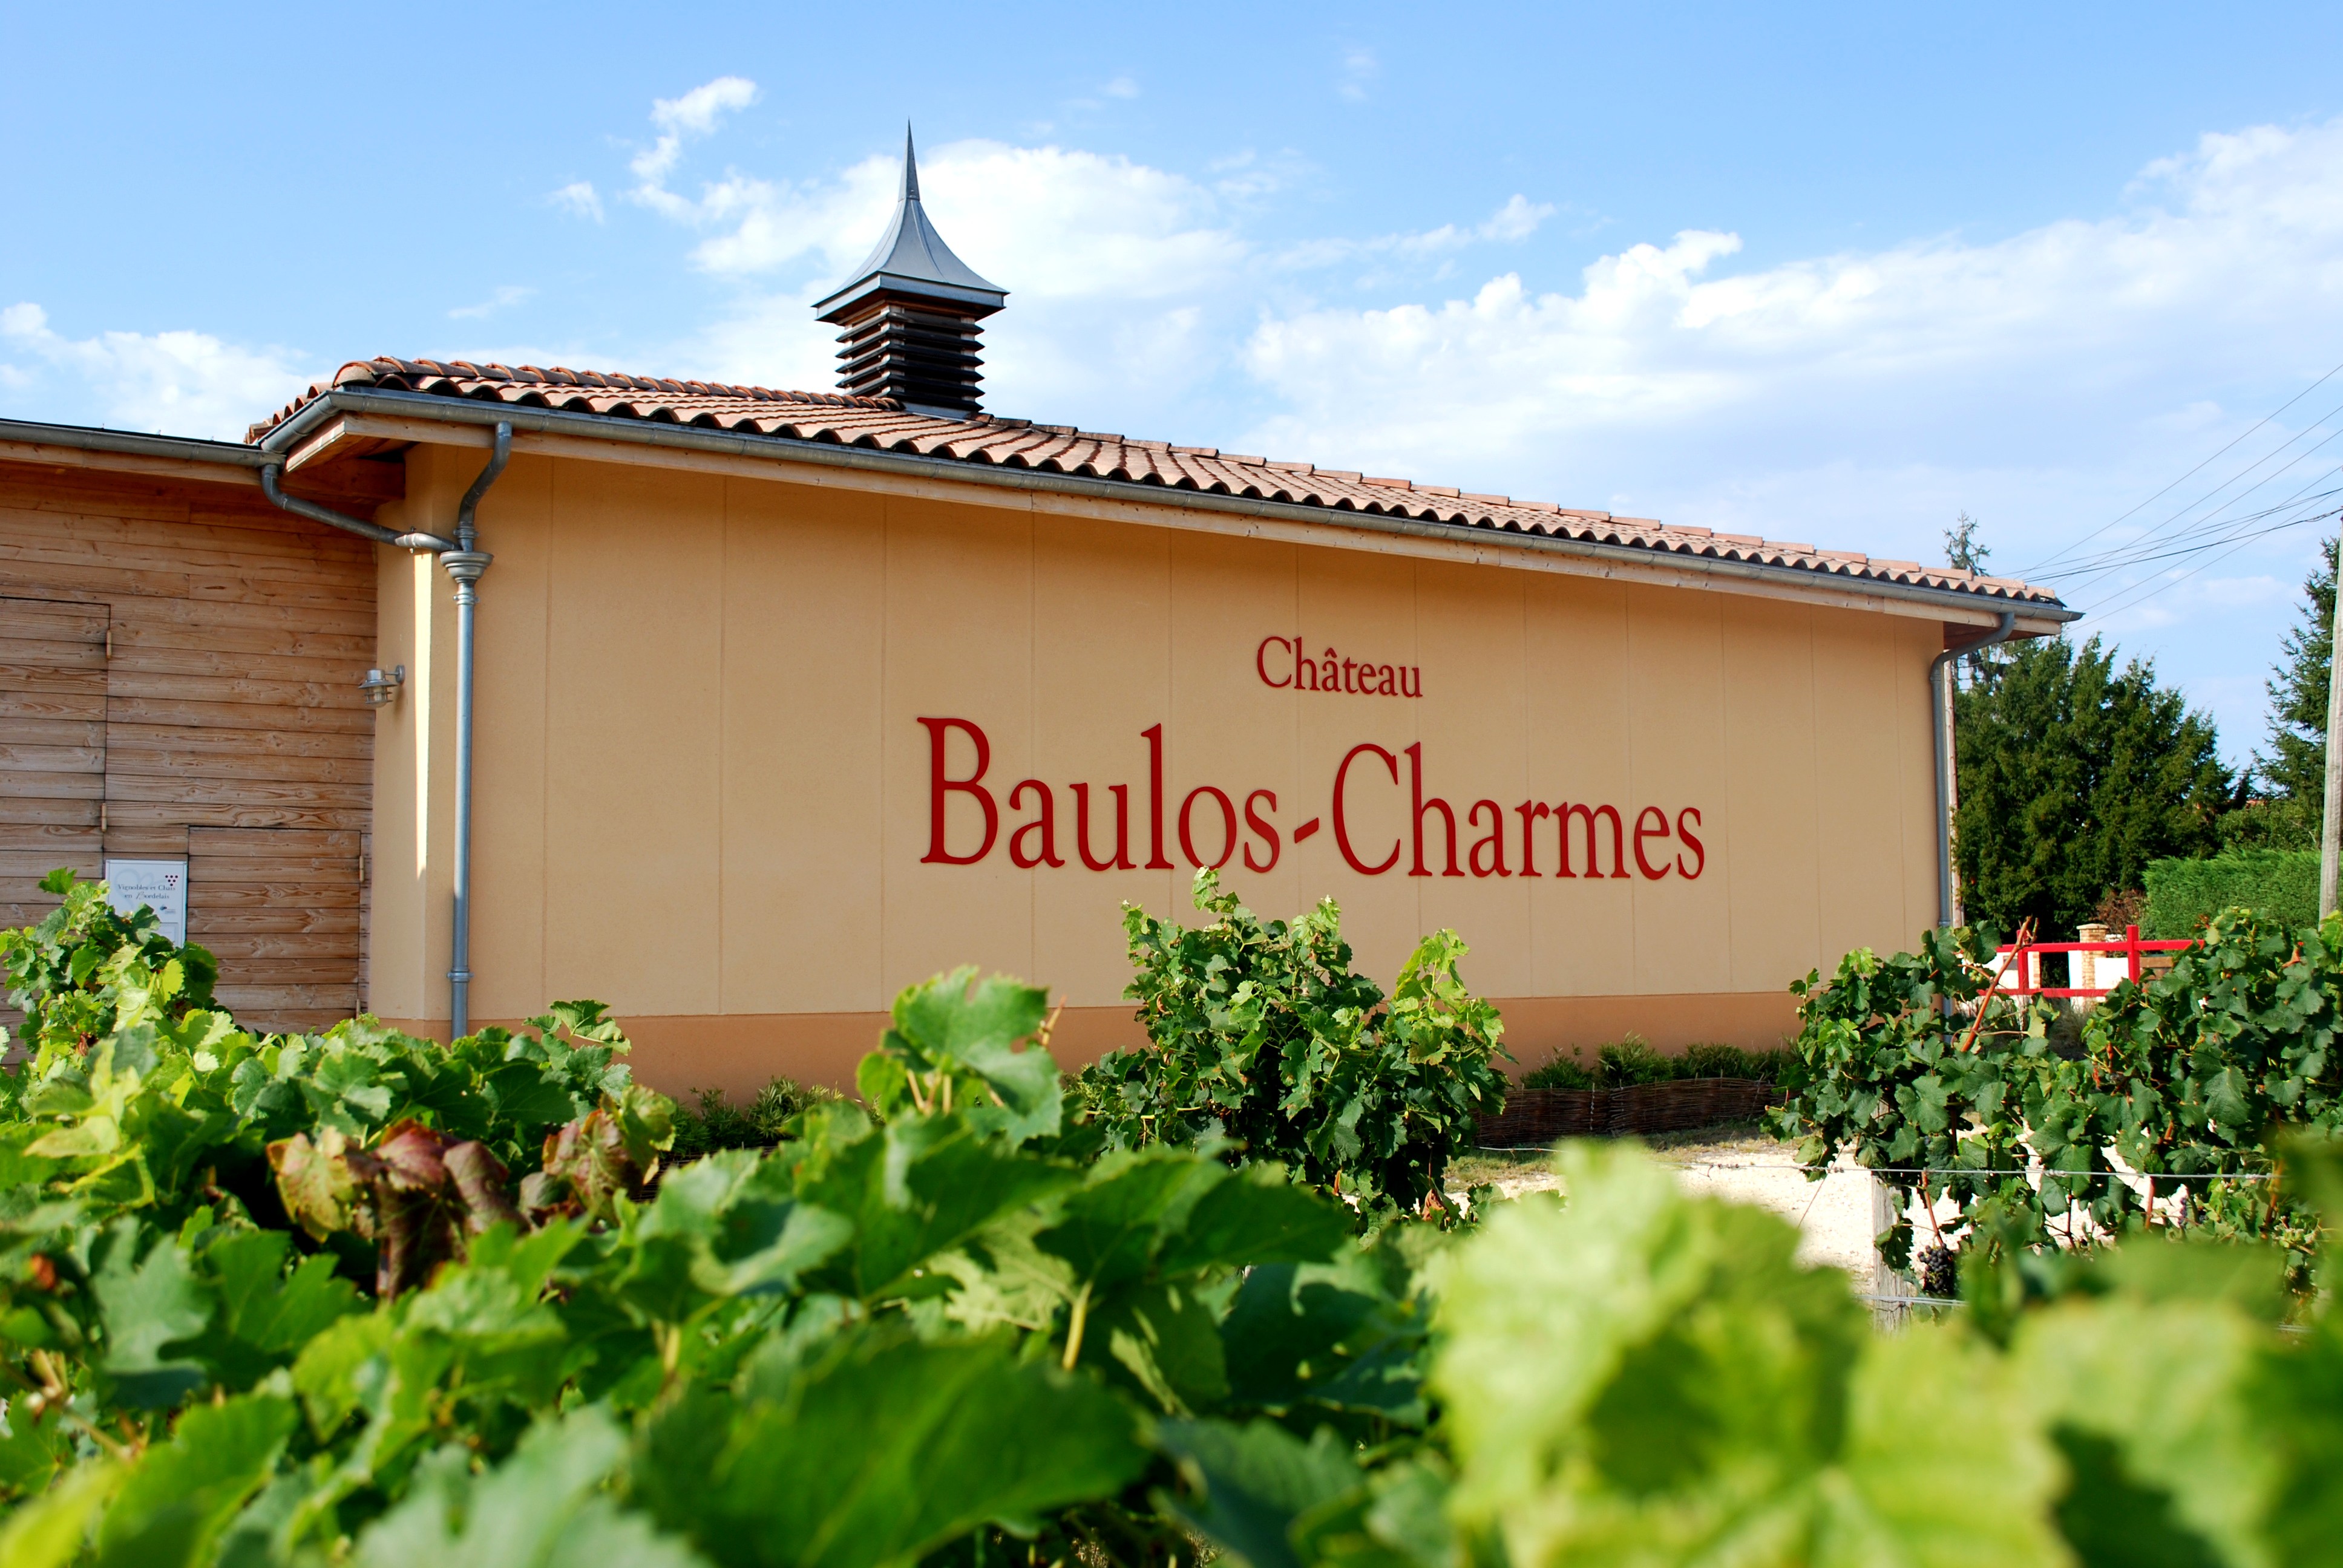 Château Baulos-Charmes